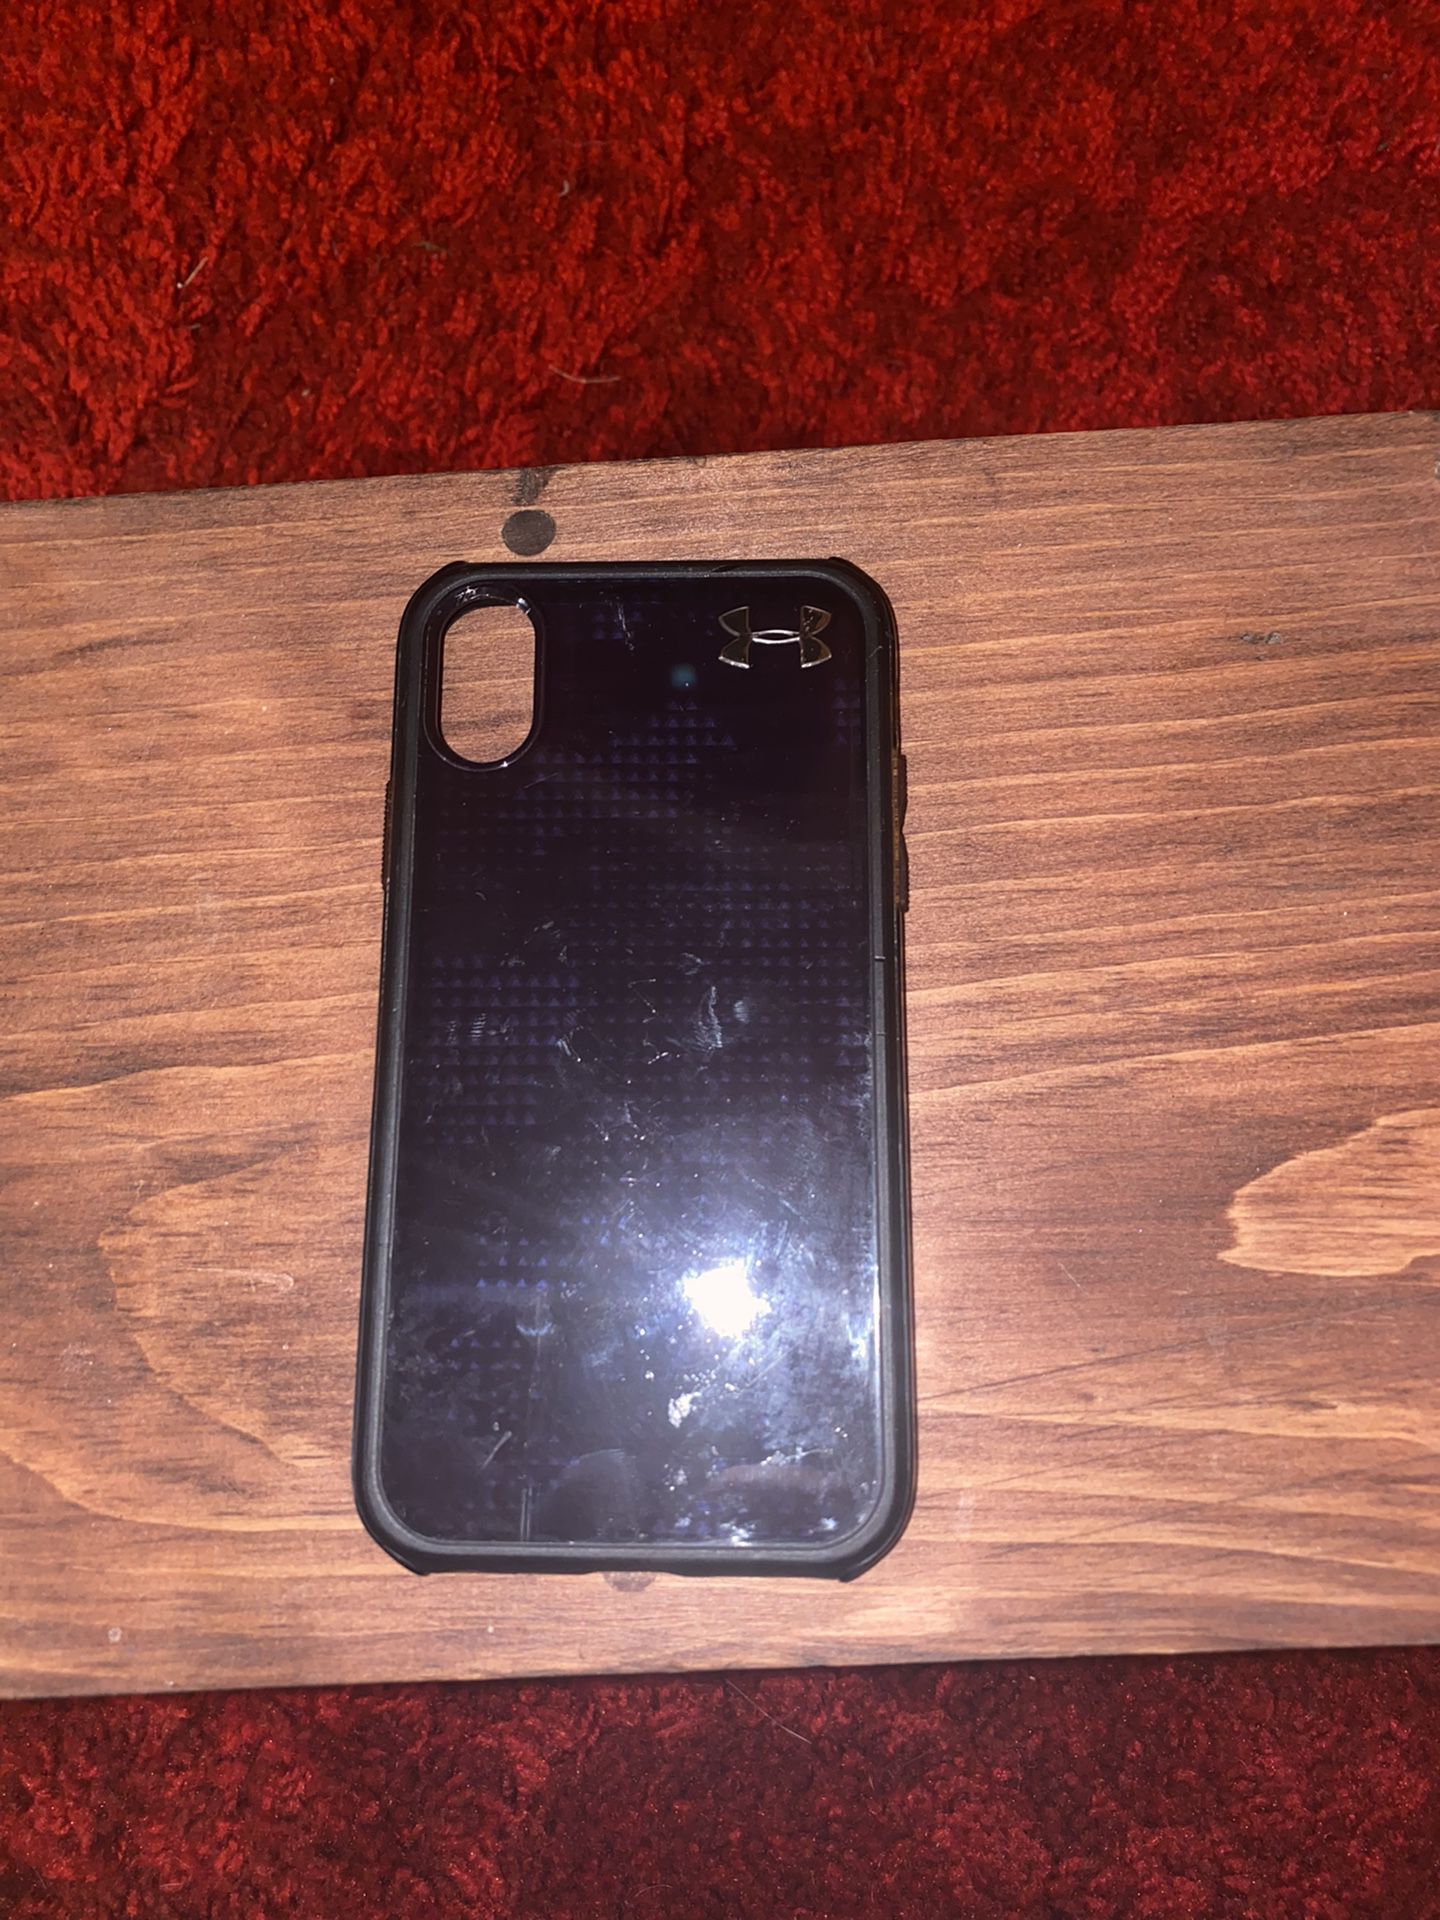 iPhone X phone case